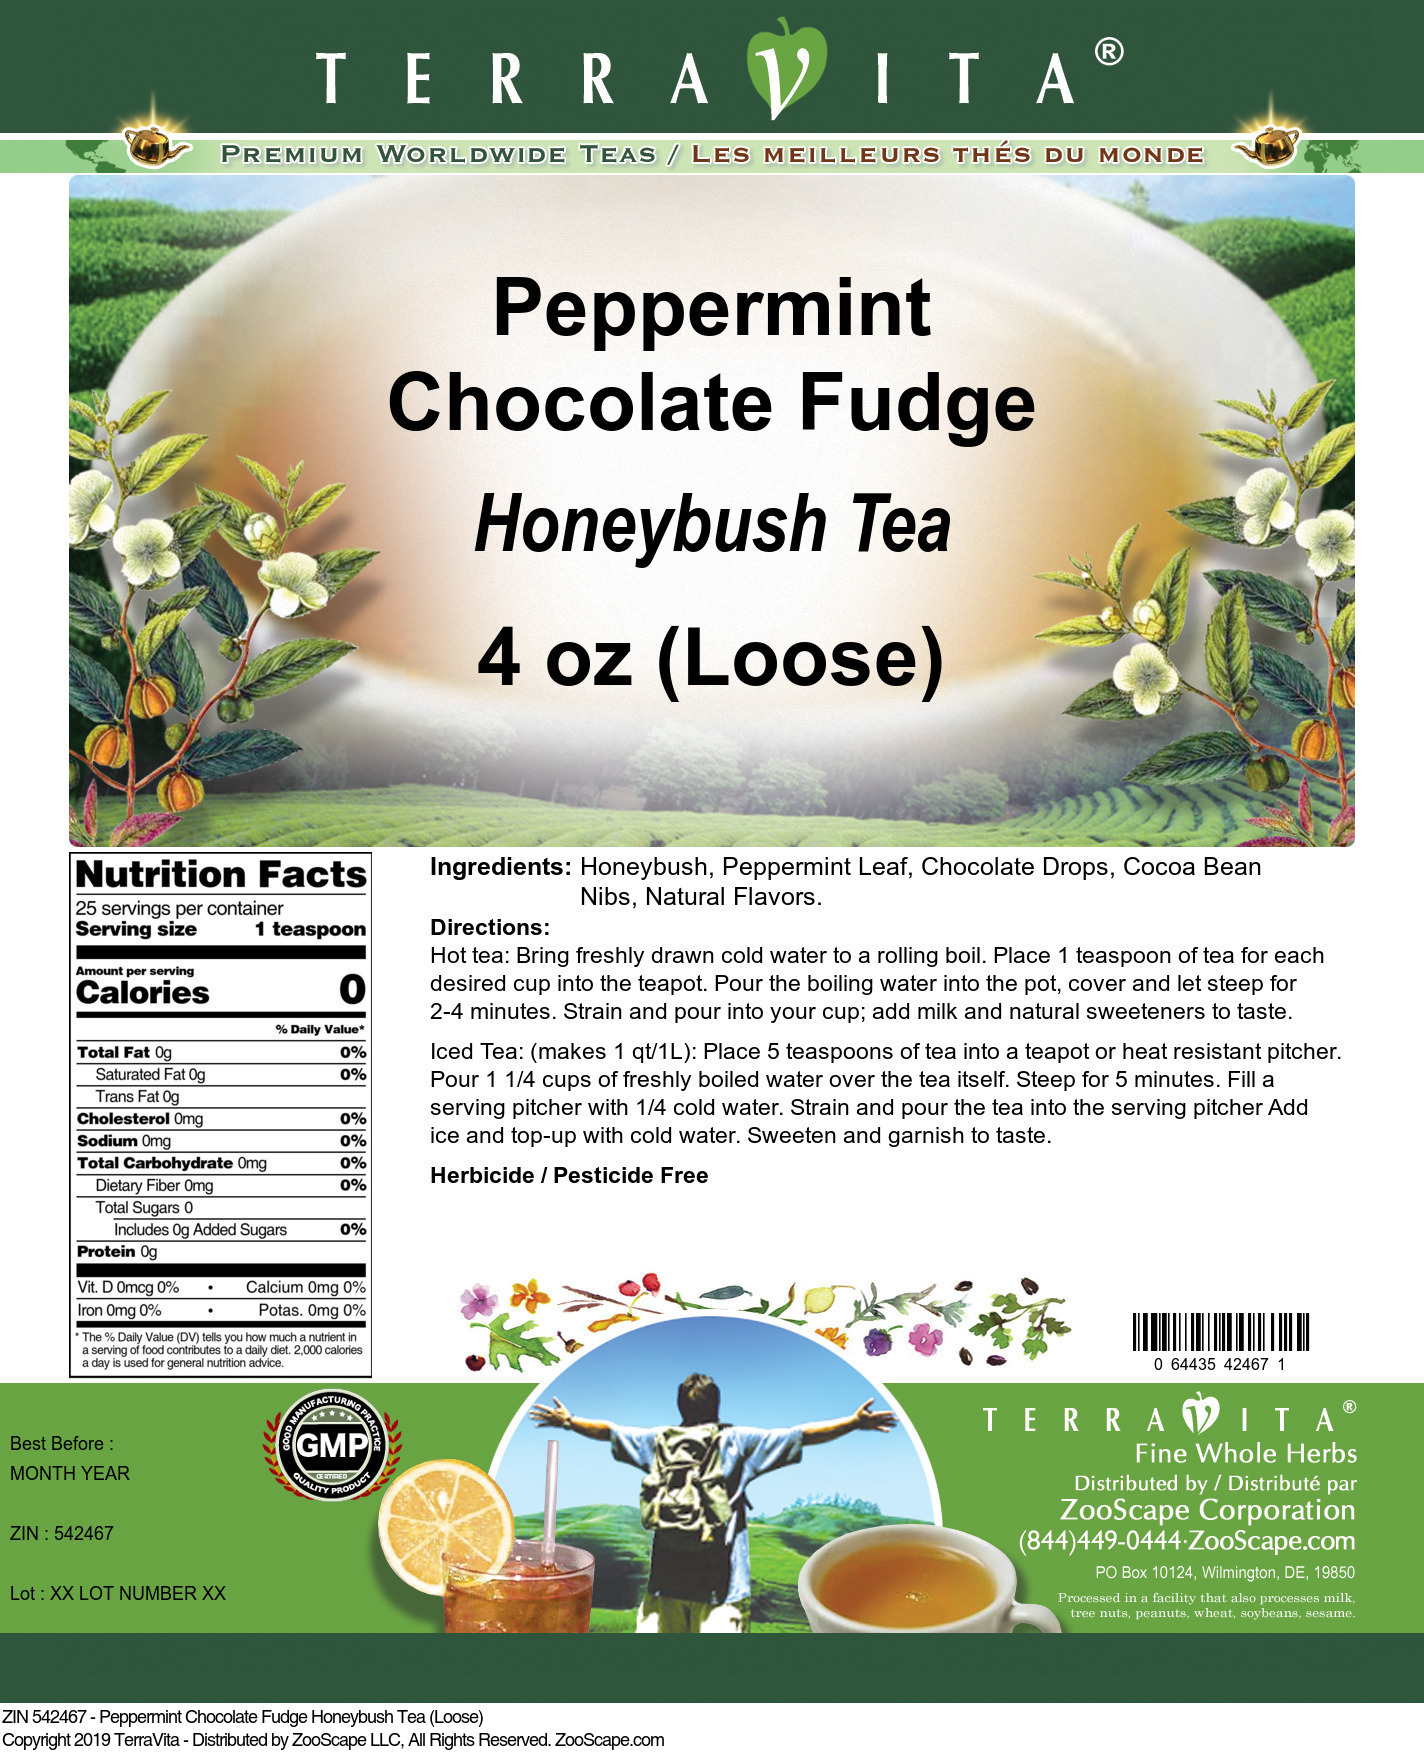 Peppermint Chocolate Fudge Honeybush Tea (Loose) - Label